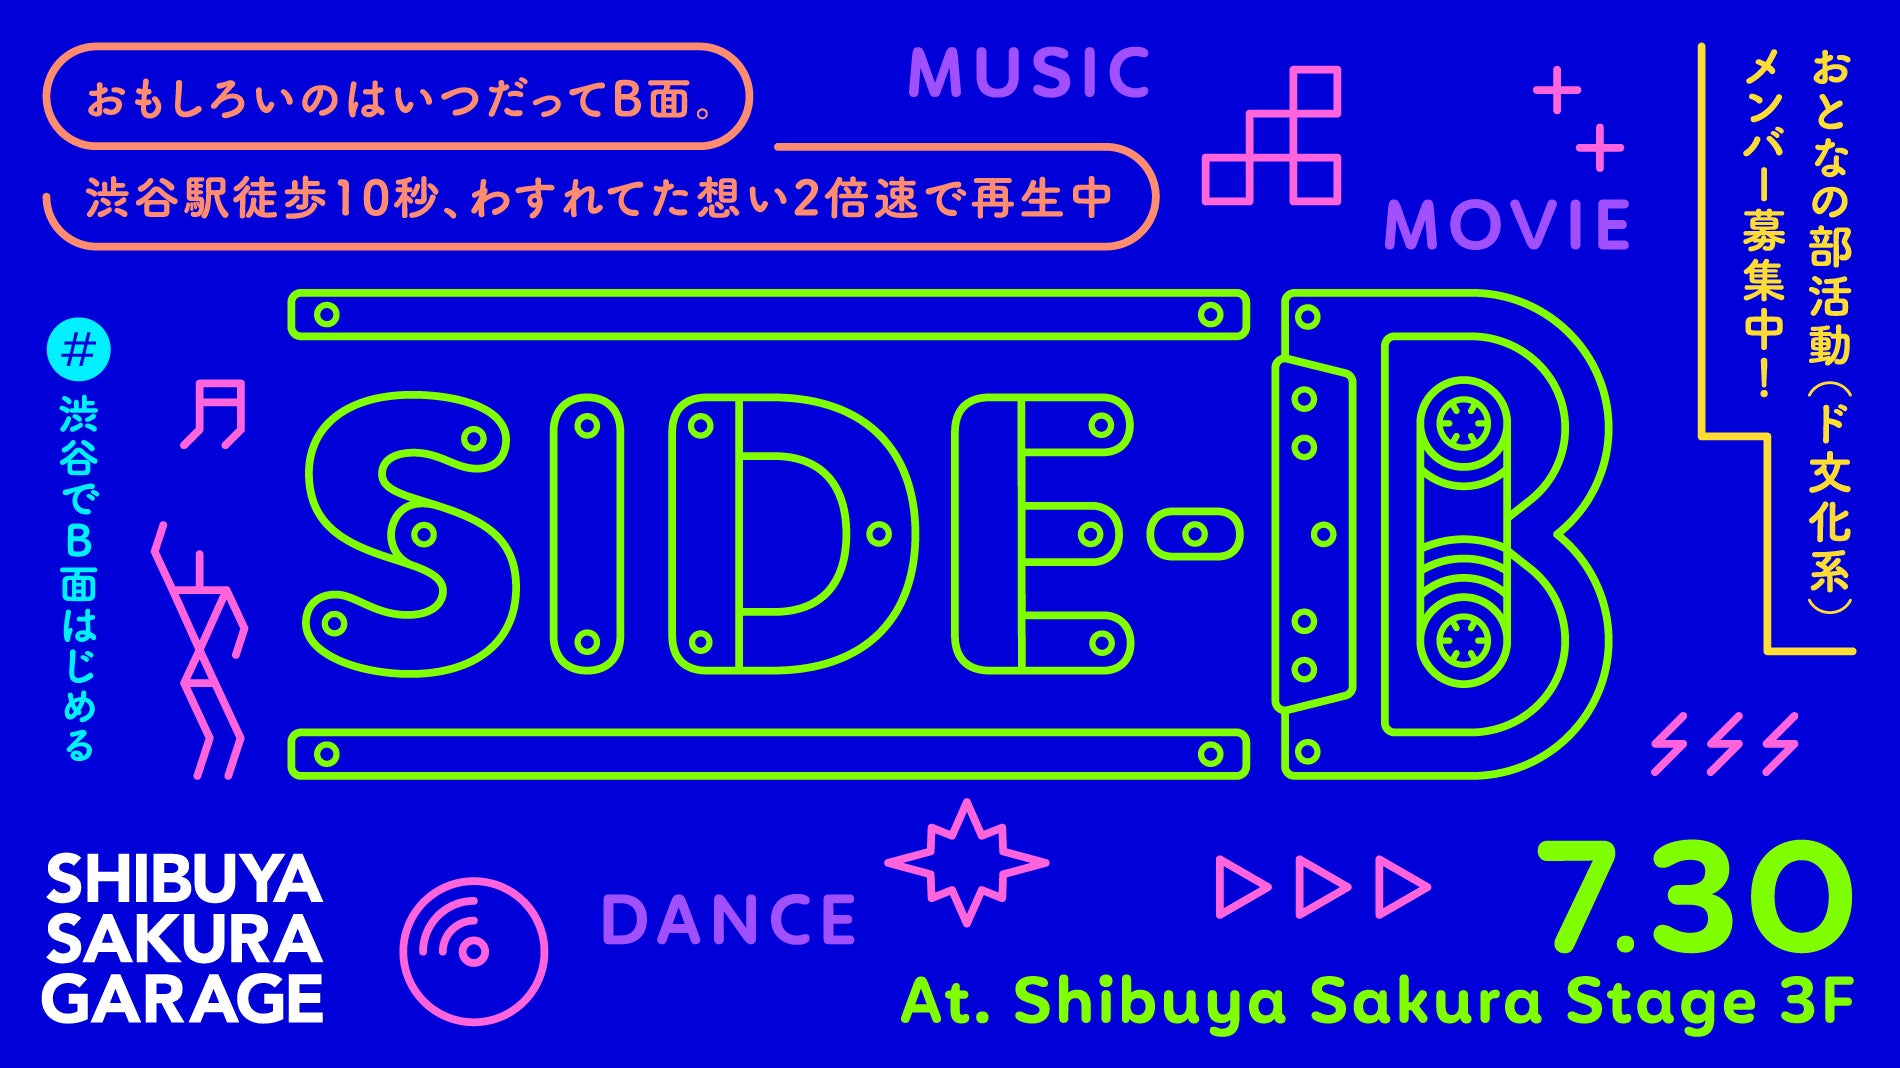 SHIBUYA SAKURA GARAGE “SIDE-B Launch Party”開催のおしらせ